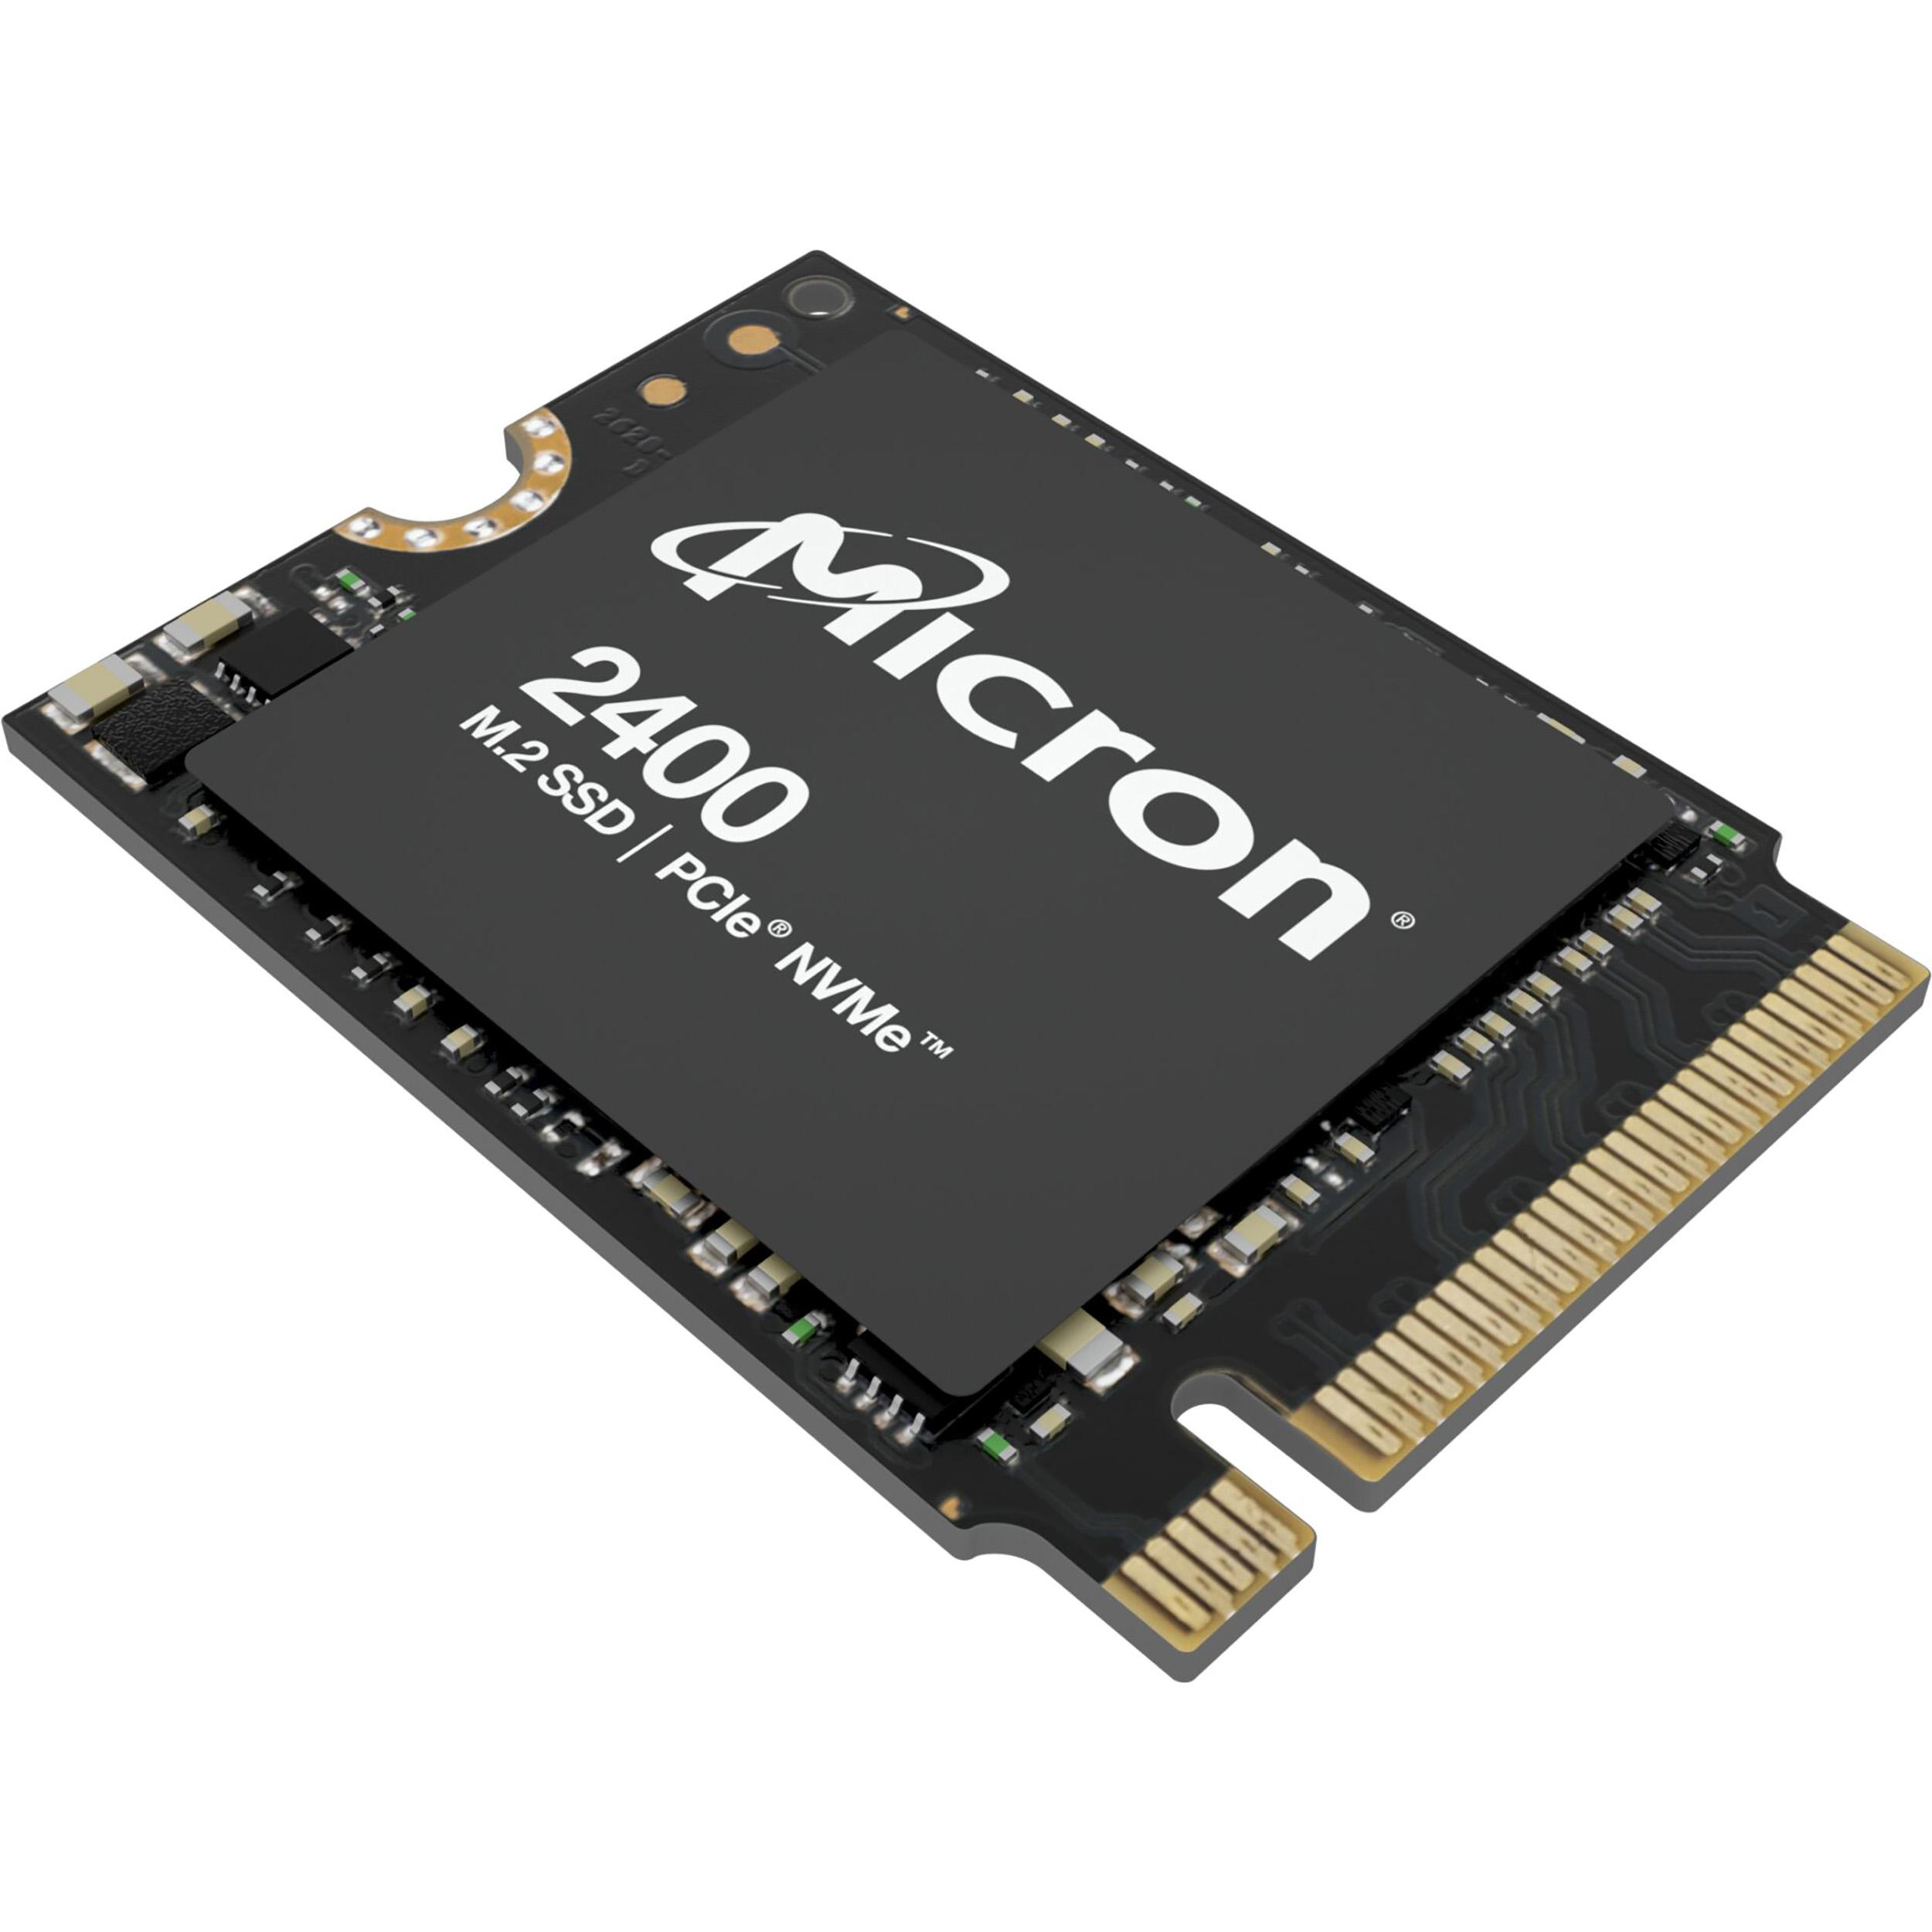 CRUCIAL Micron 2400 Express, intern Festplatte, M.2 GB NVMe SSD PCI 1000 Non-SED